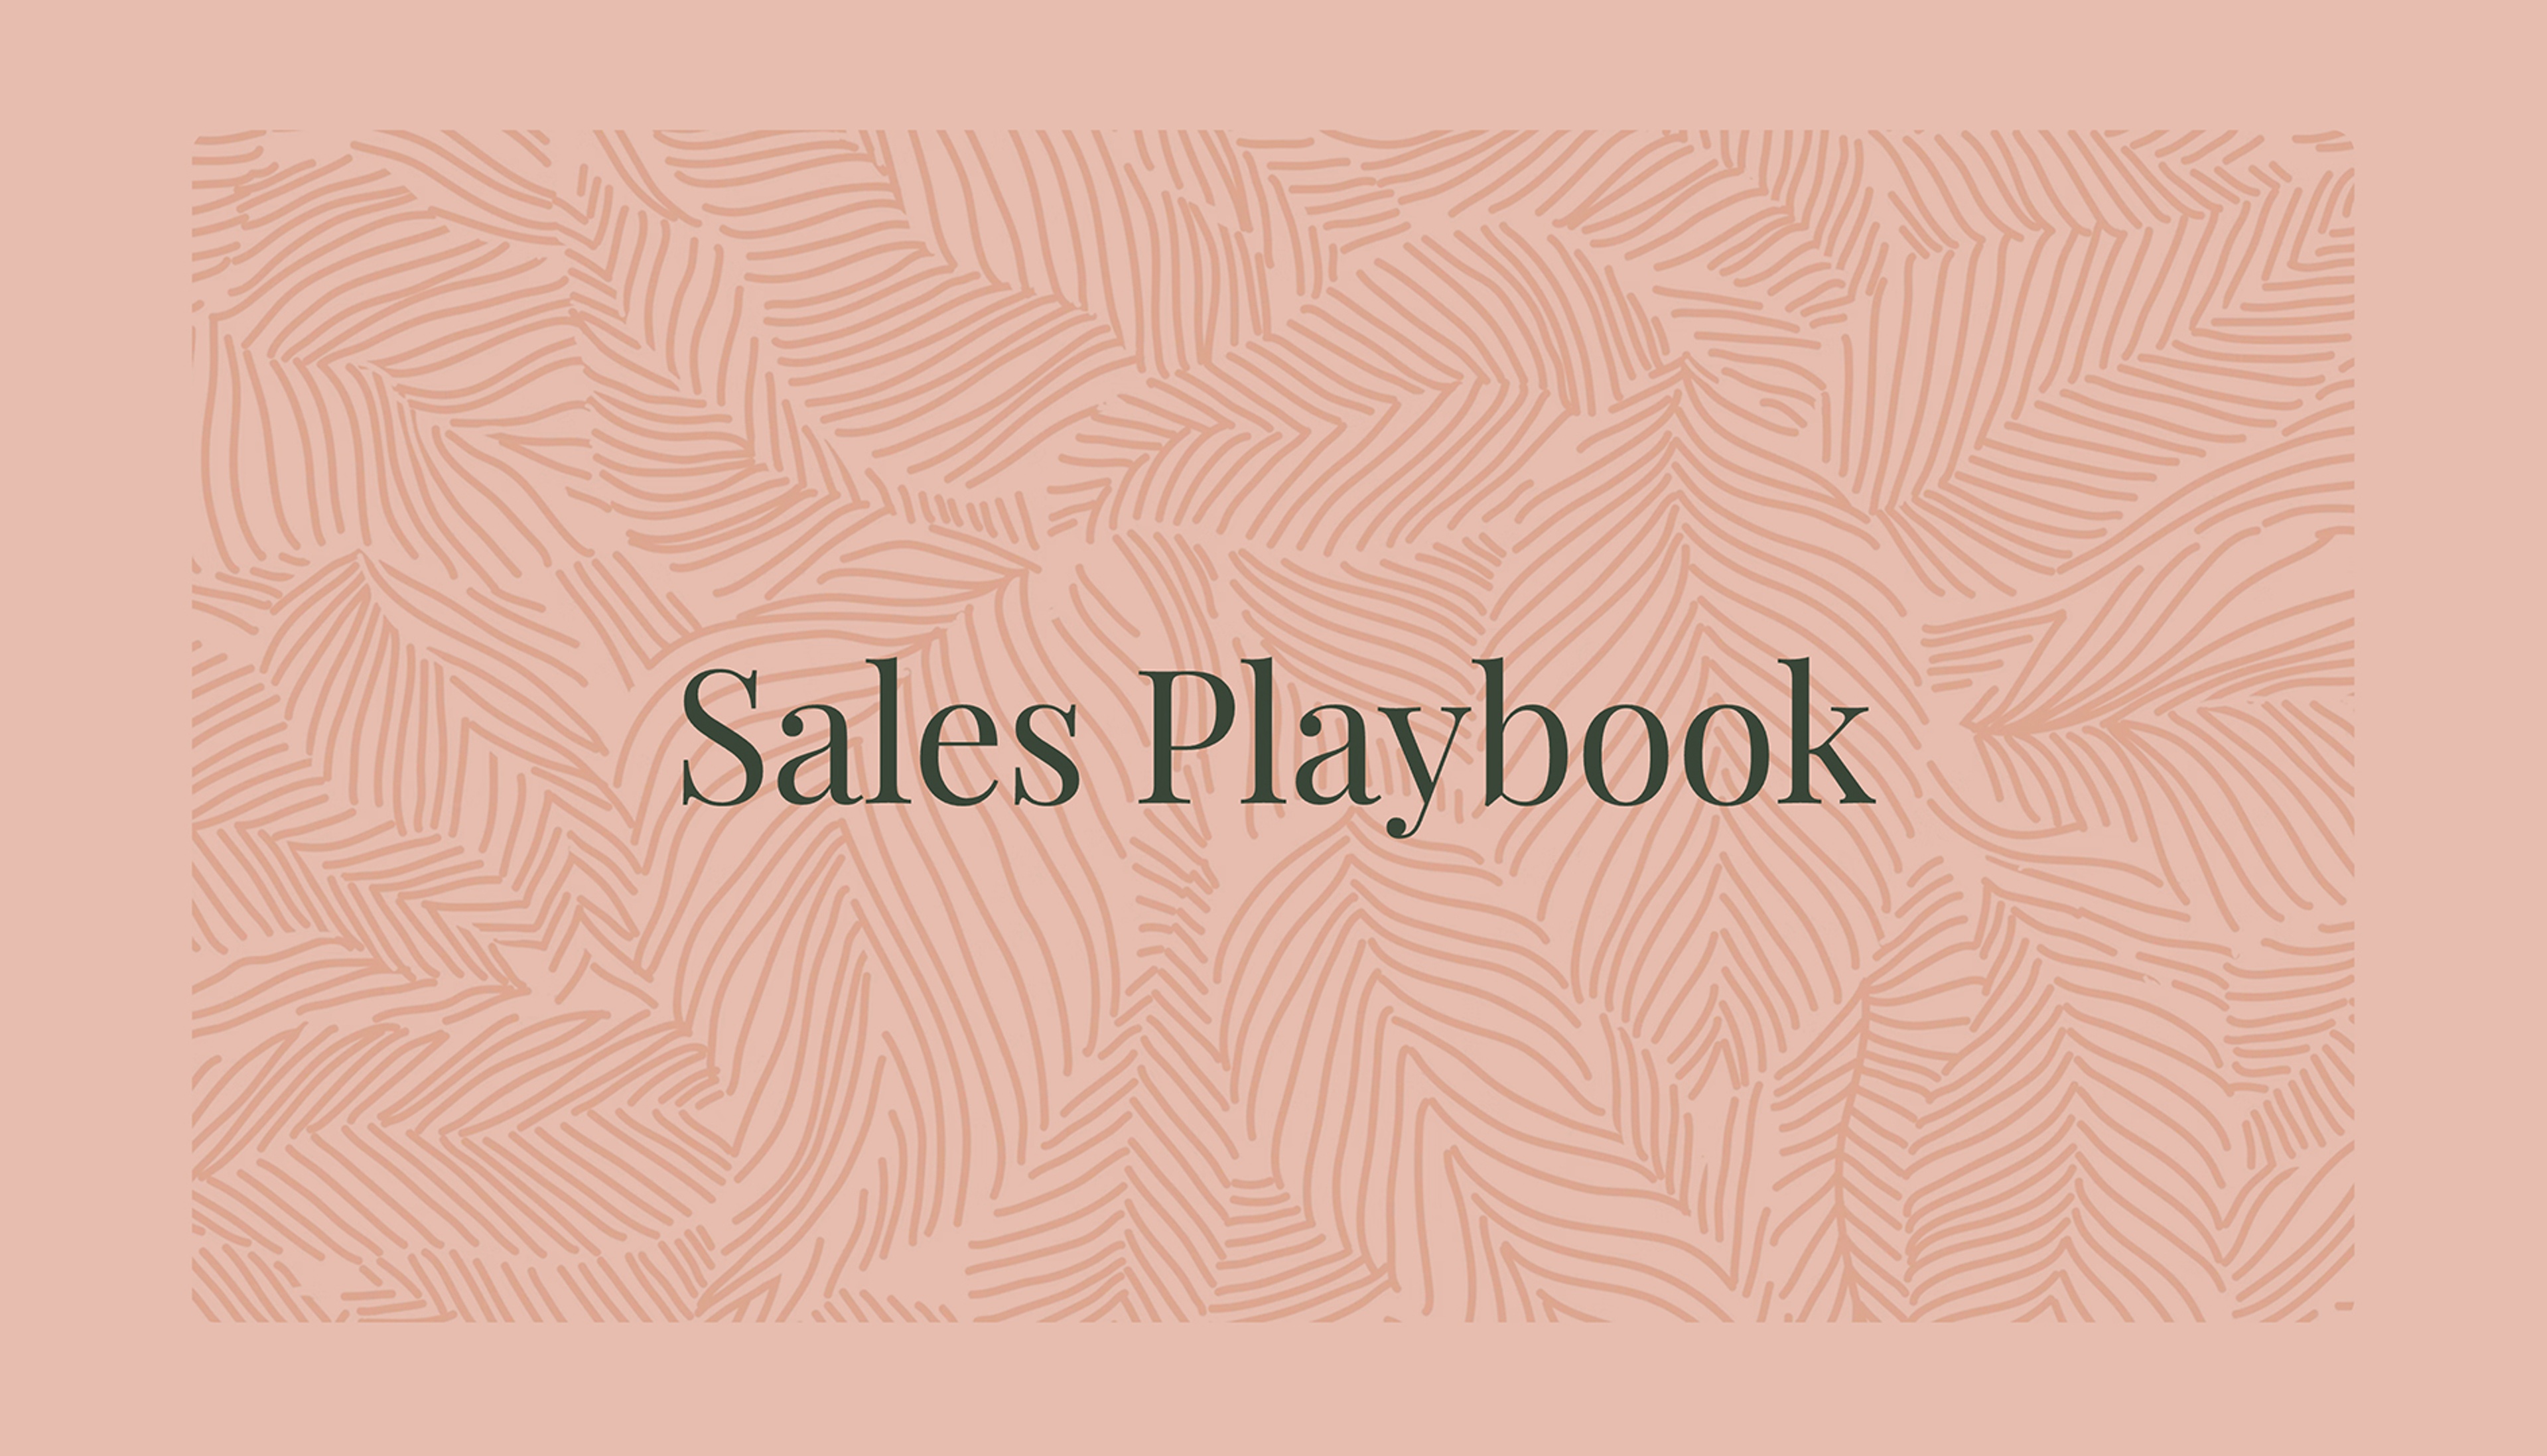 Sales Playbook - Title